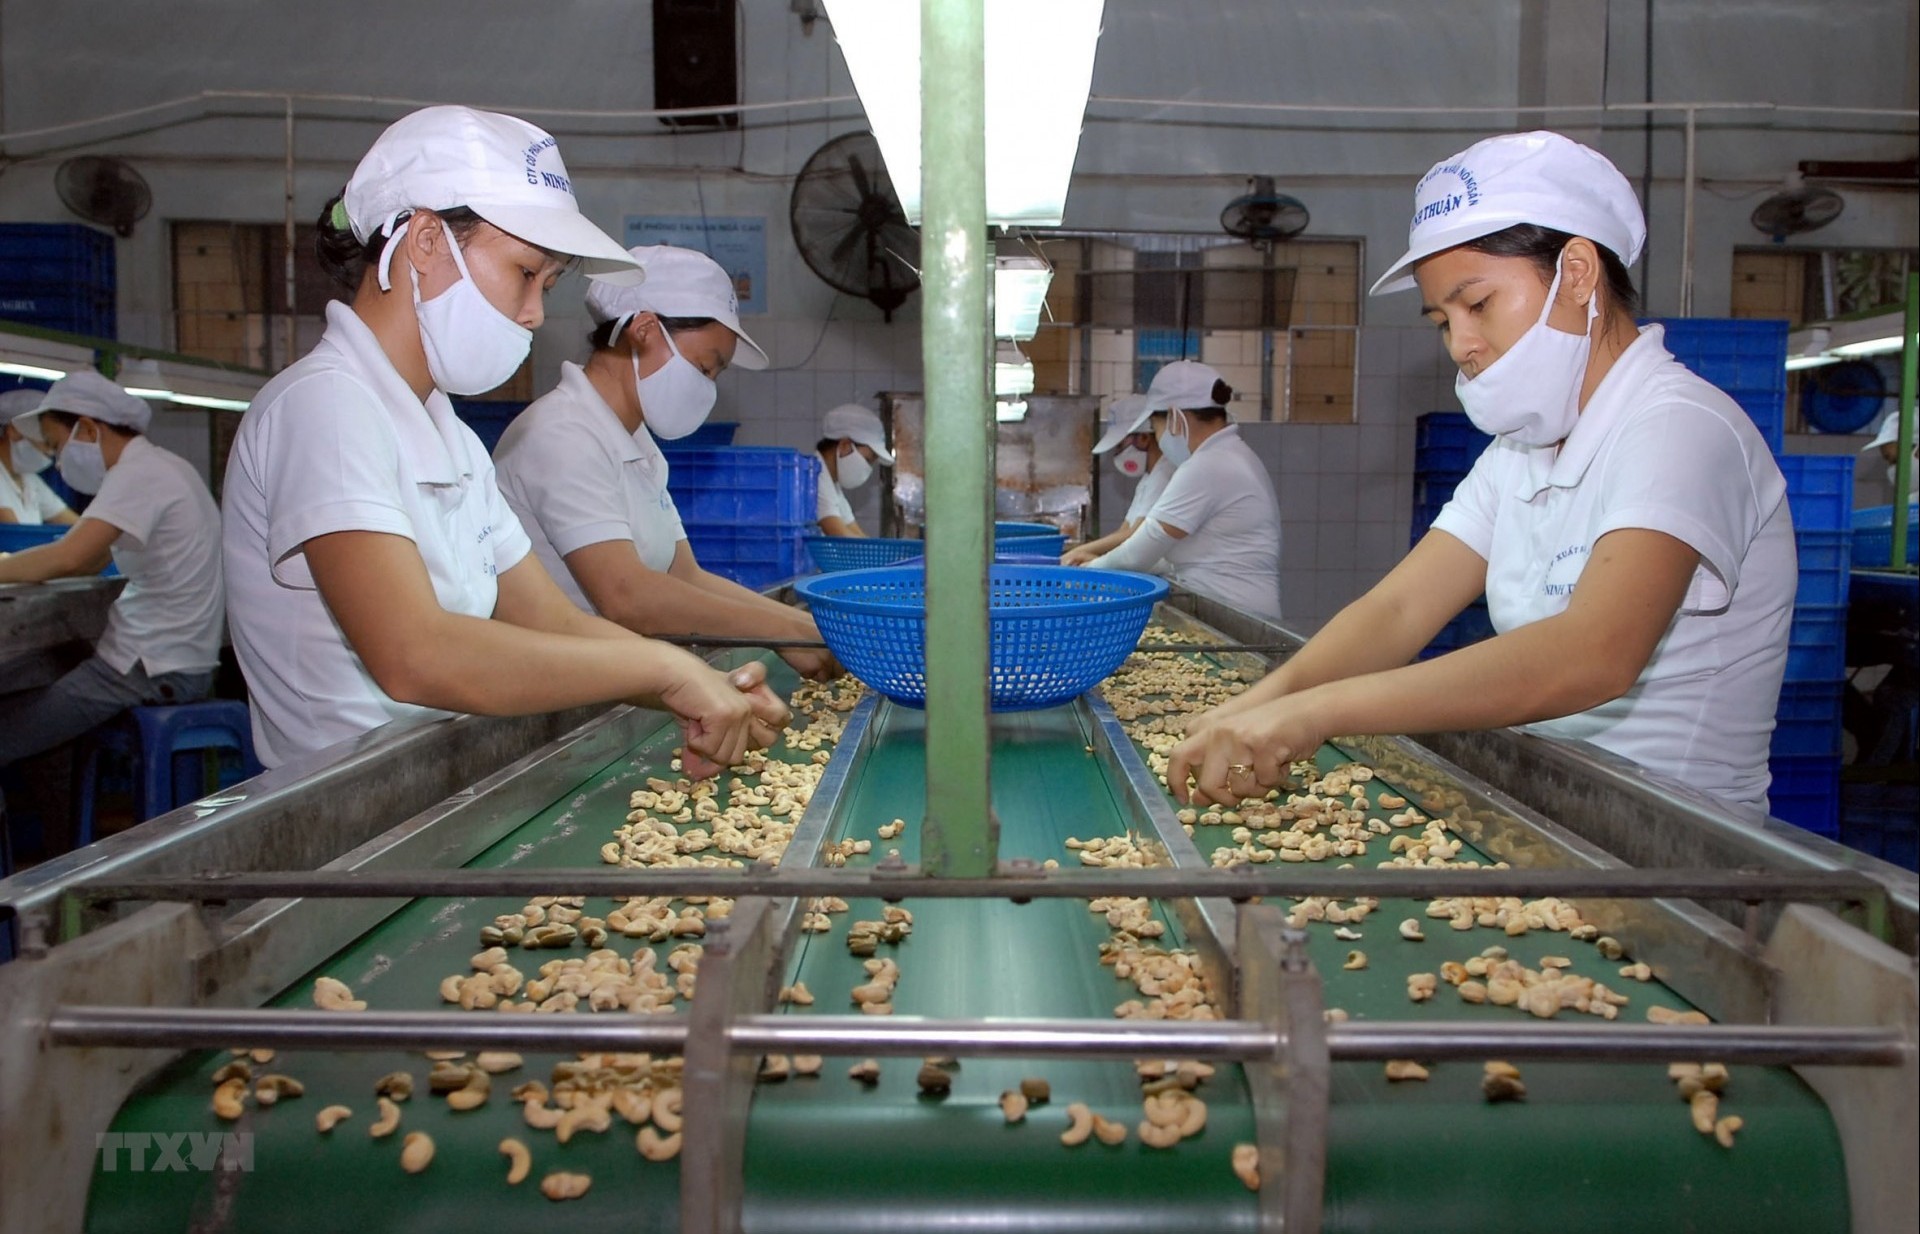 Agreement offers RoK market opportunities for Vietnamese goods